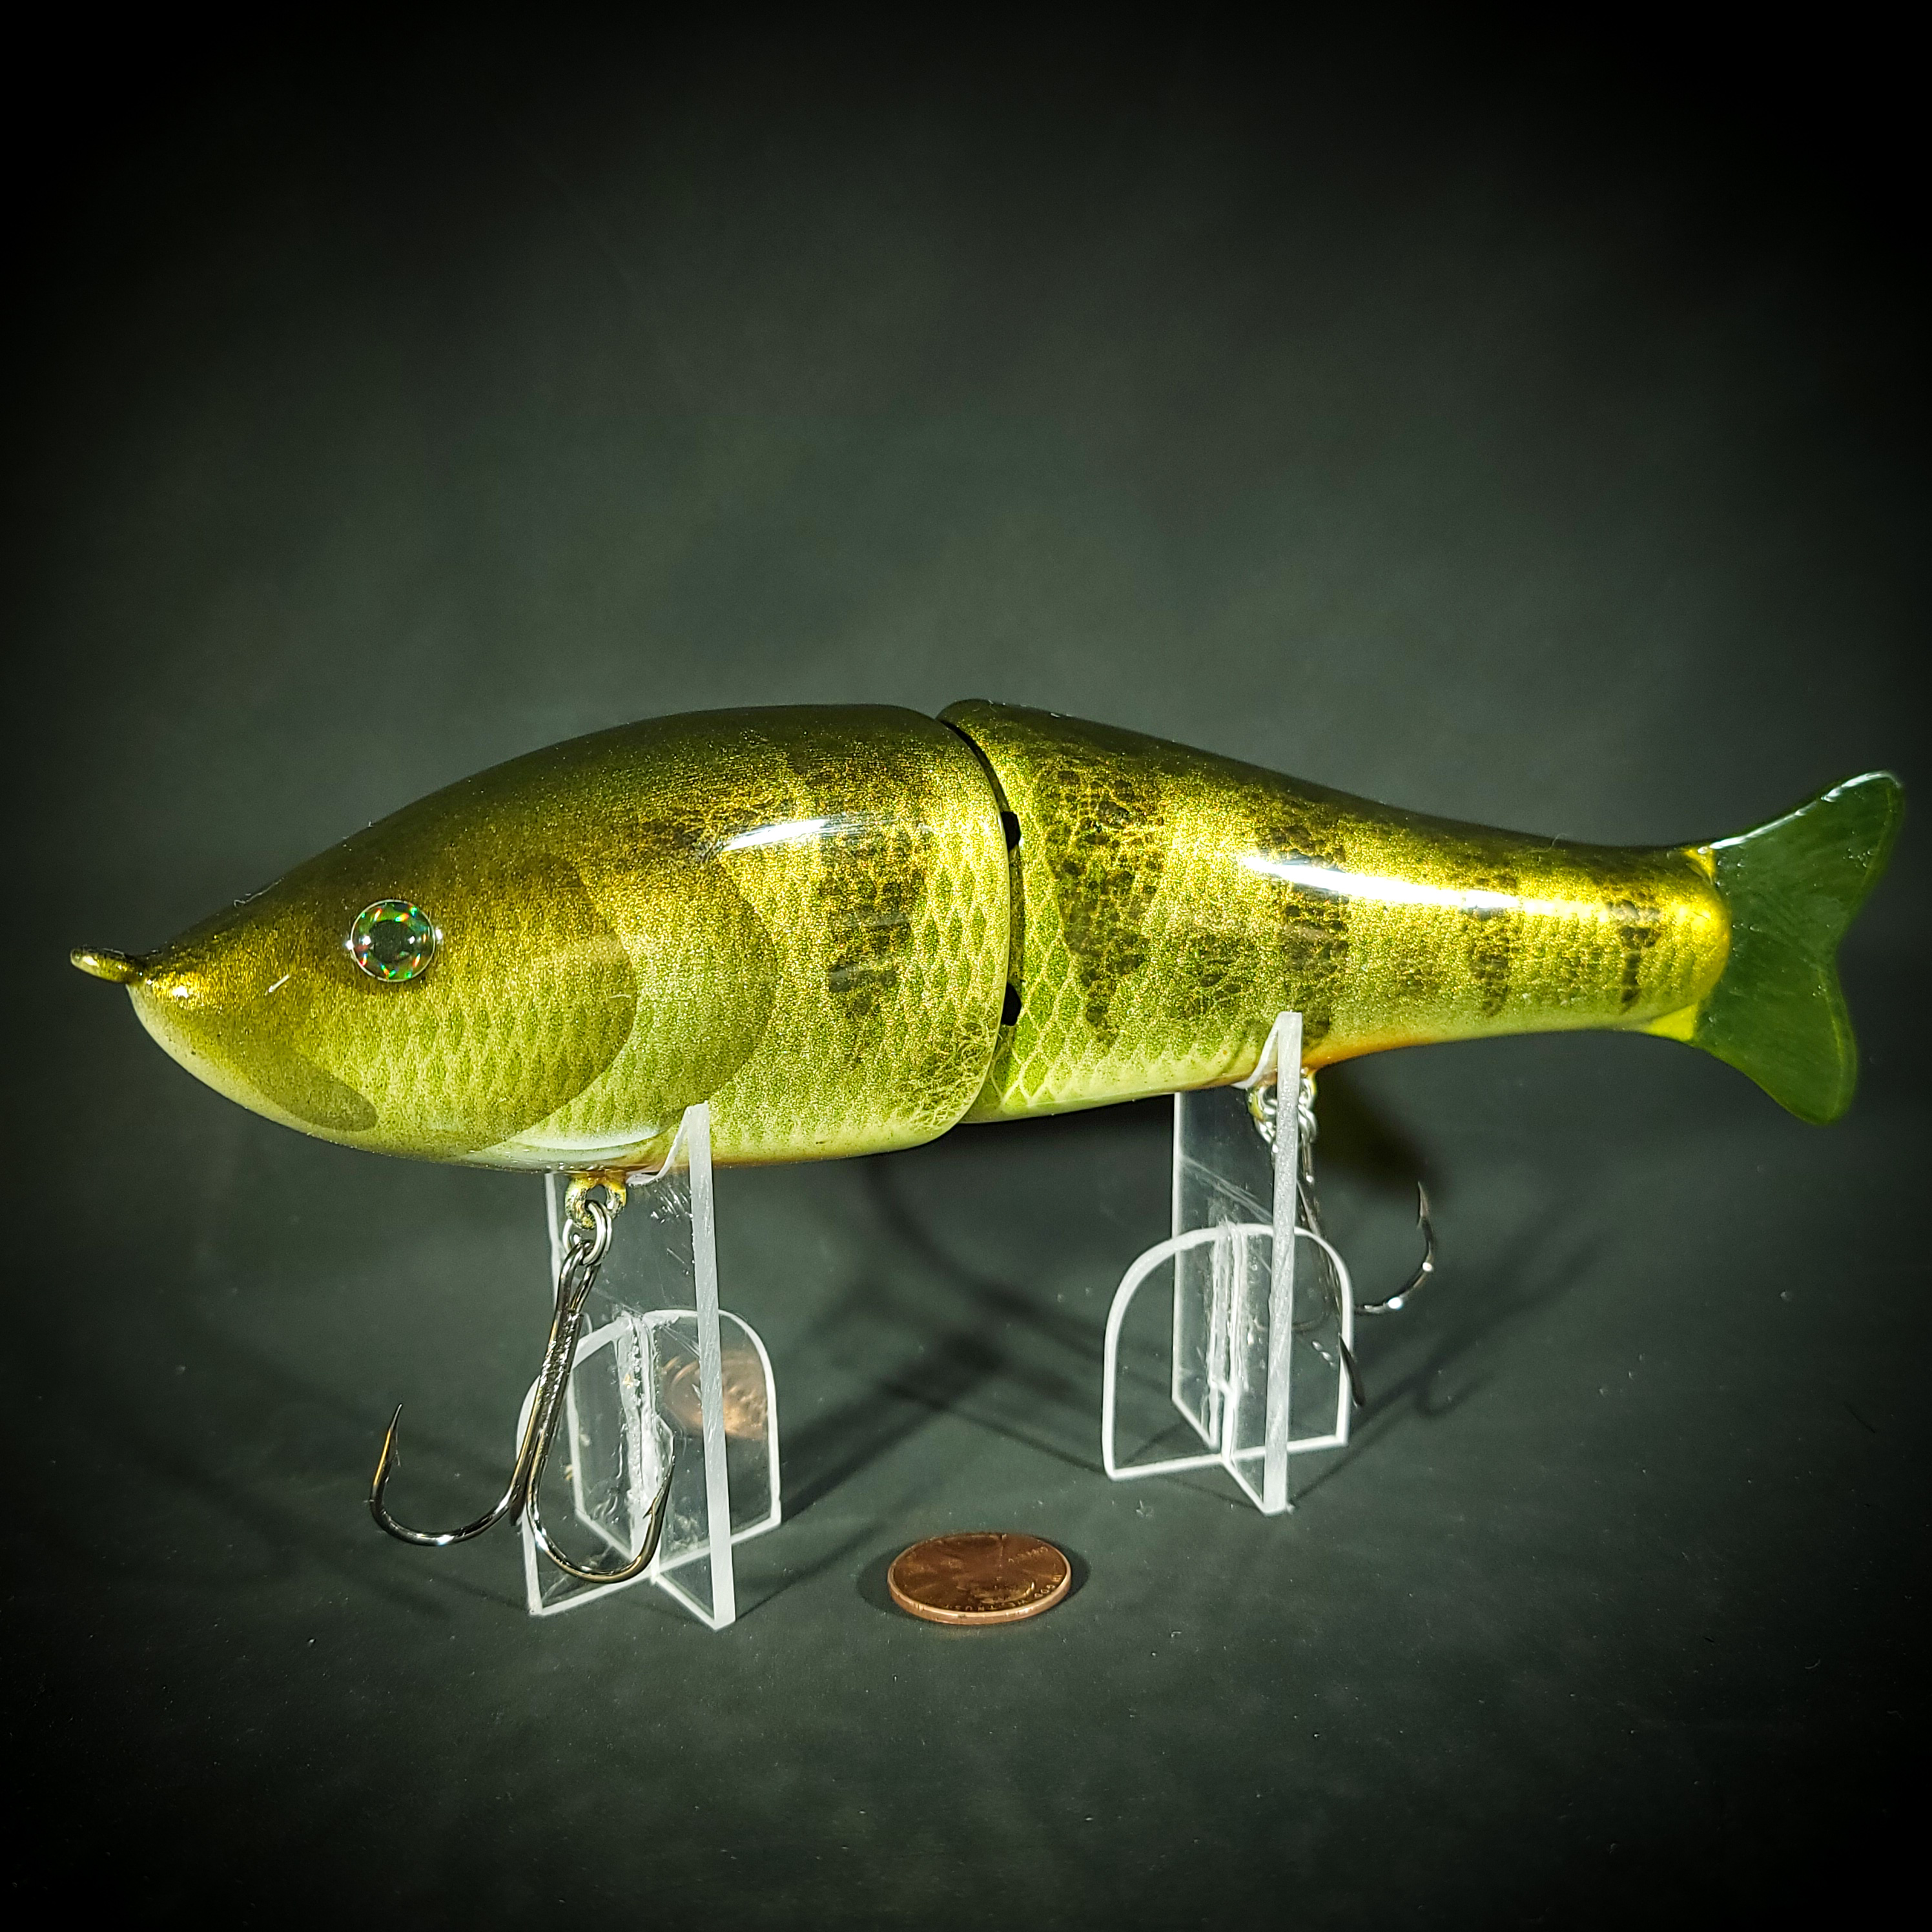 Wood glide baits, Wake baits, & crankbaits made for trophy fish